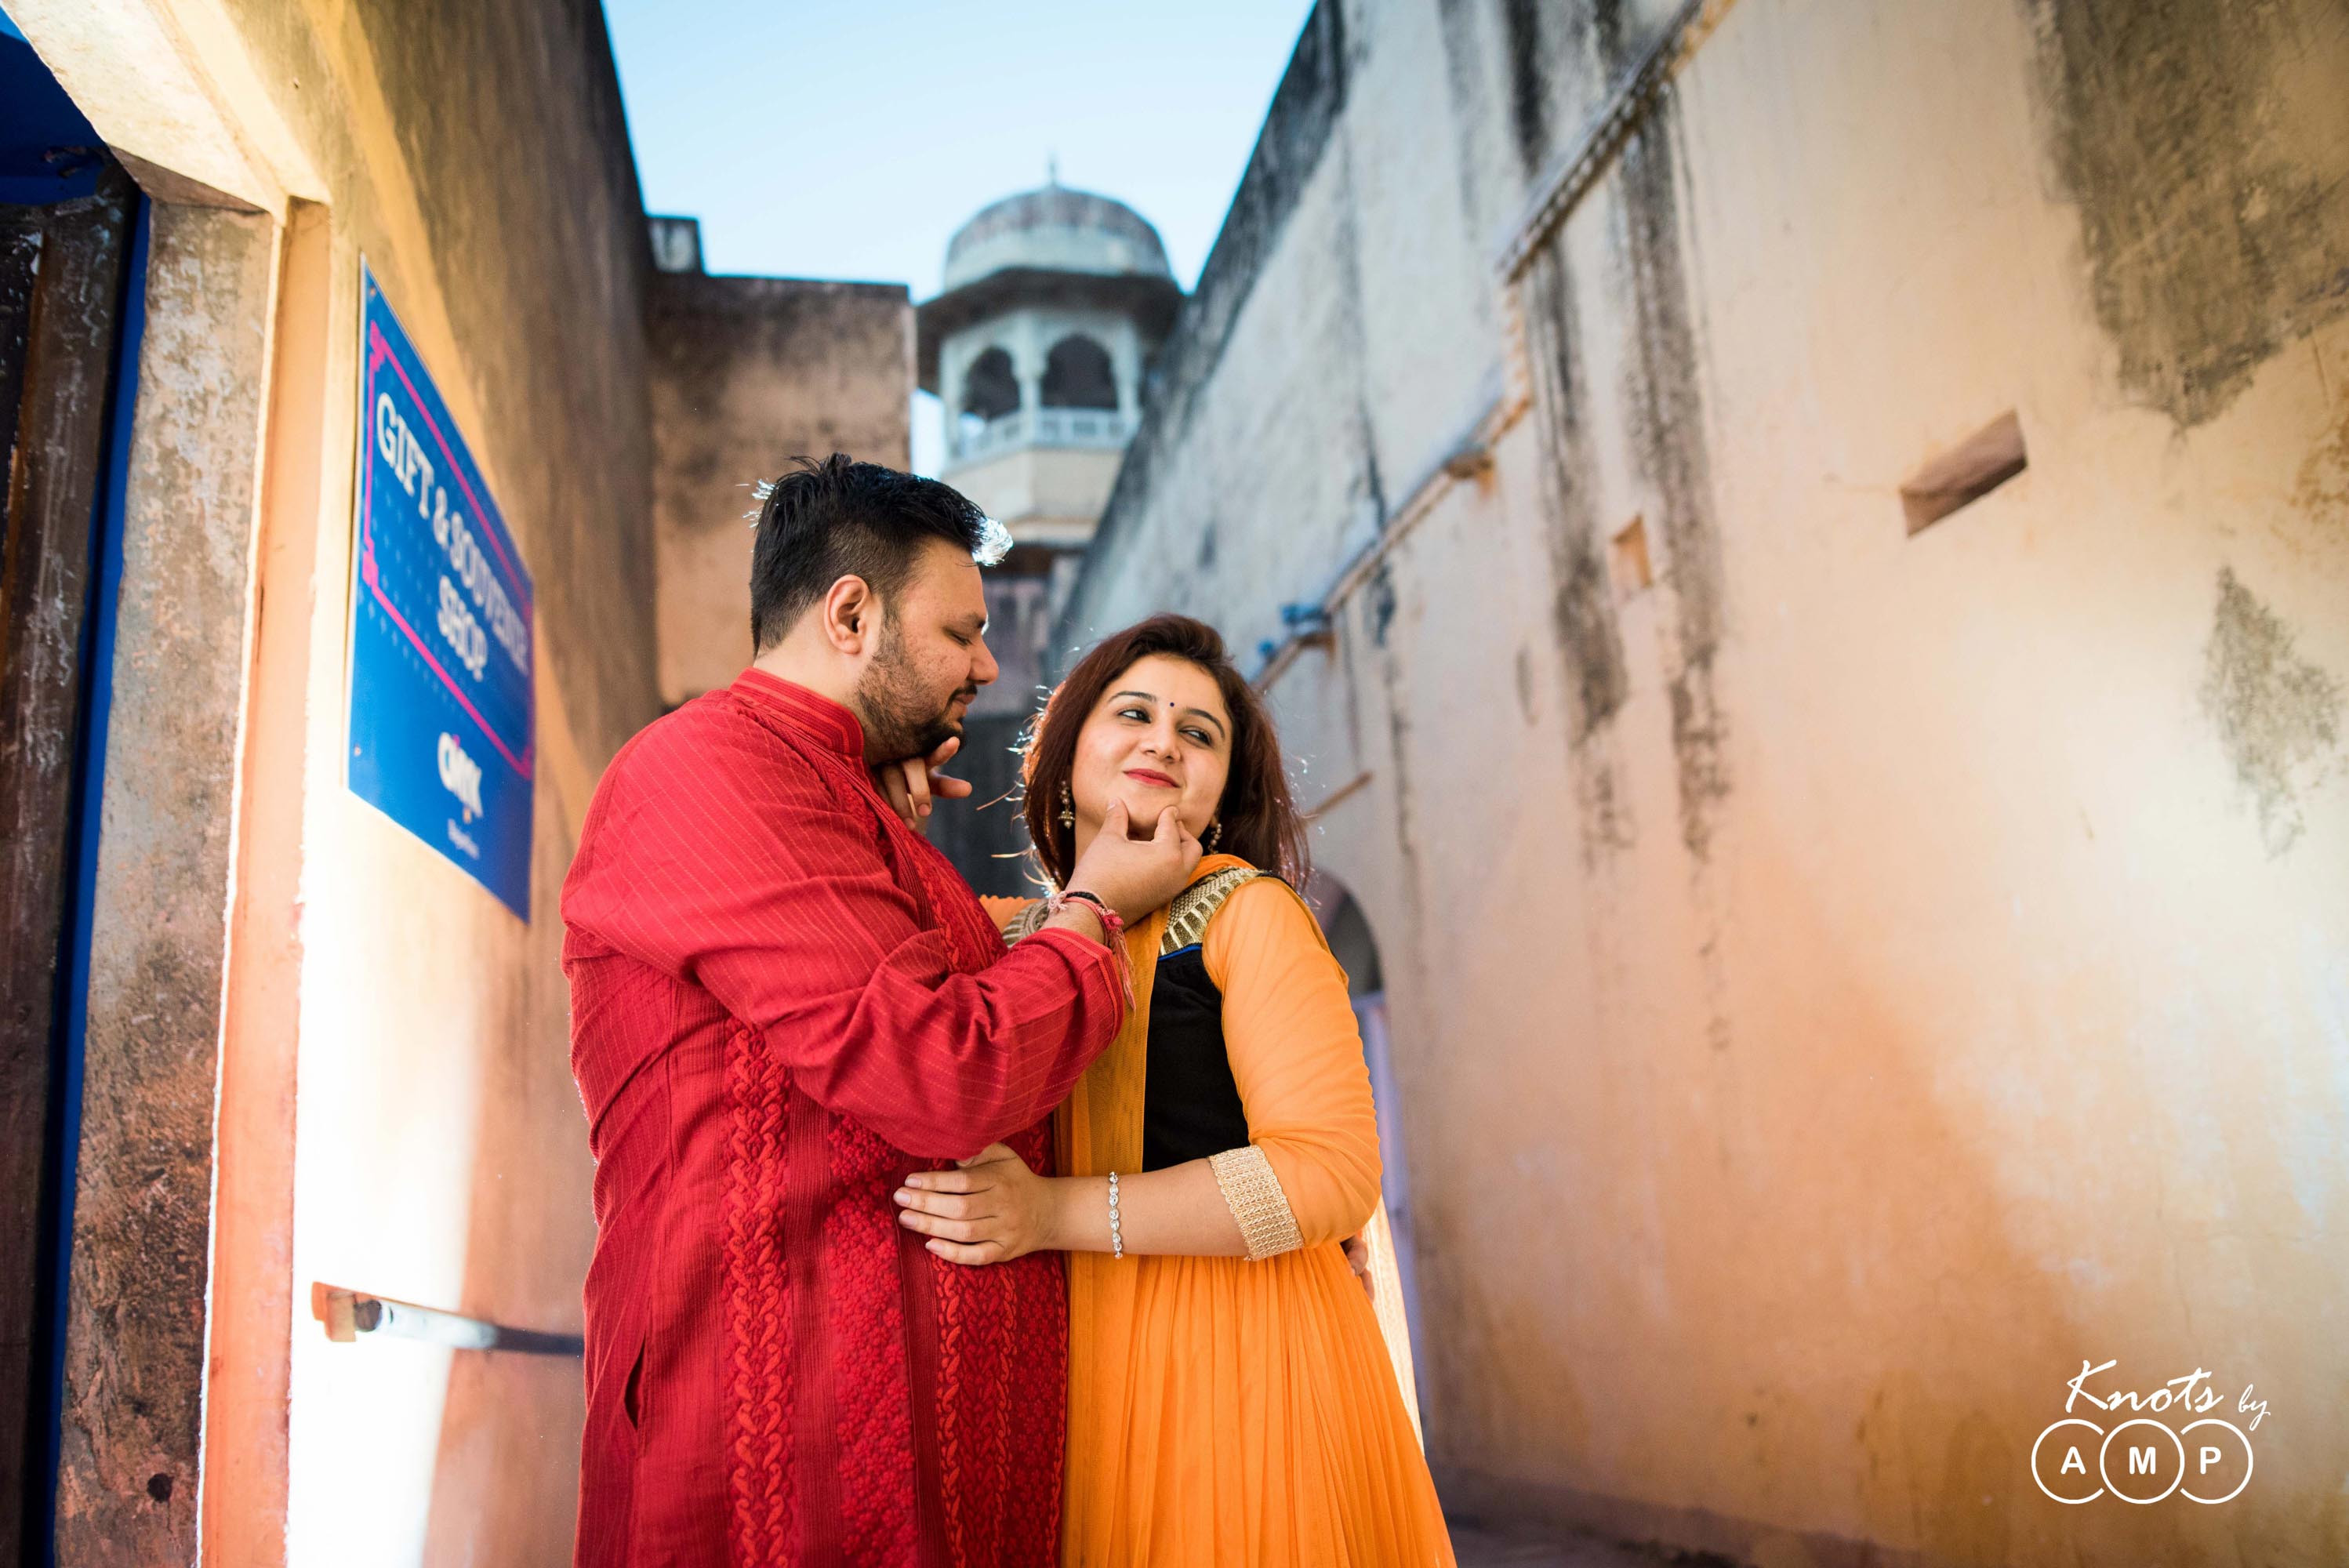 Couple Shoot In Jaipur Best Wedding Photographers In India Knotsbyamp 1394